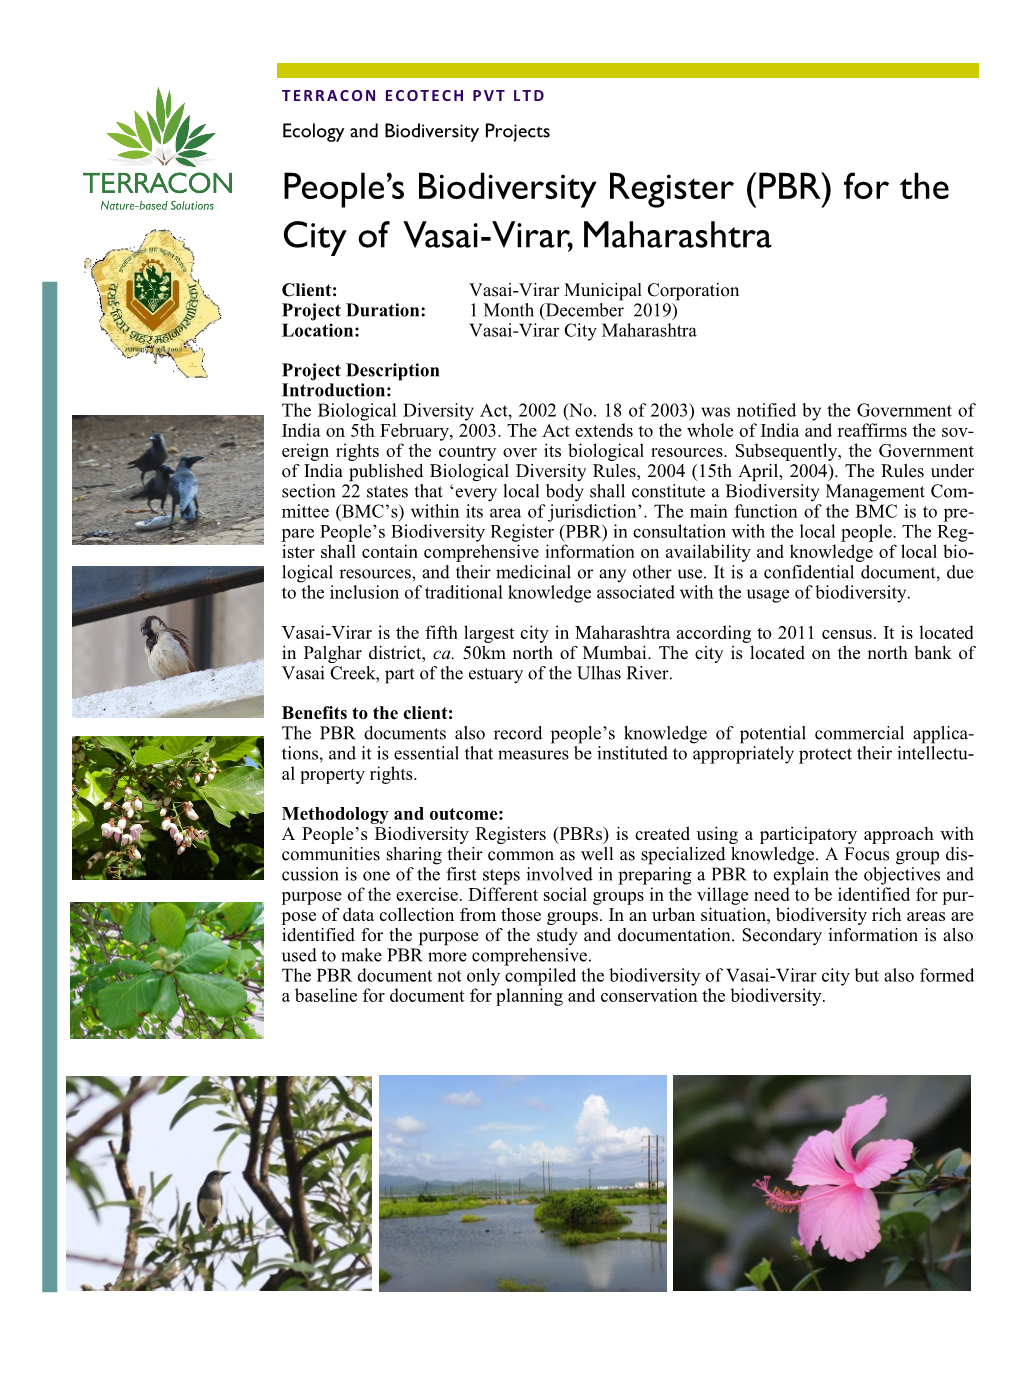 People's Biodiversity Register (PBR) for the City of Vasai-Virar, Maharashtra